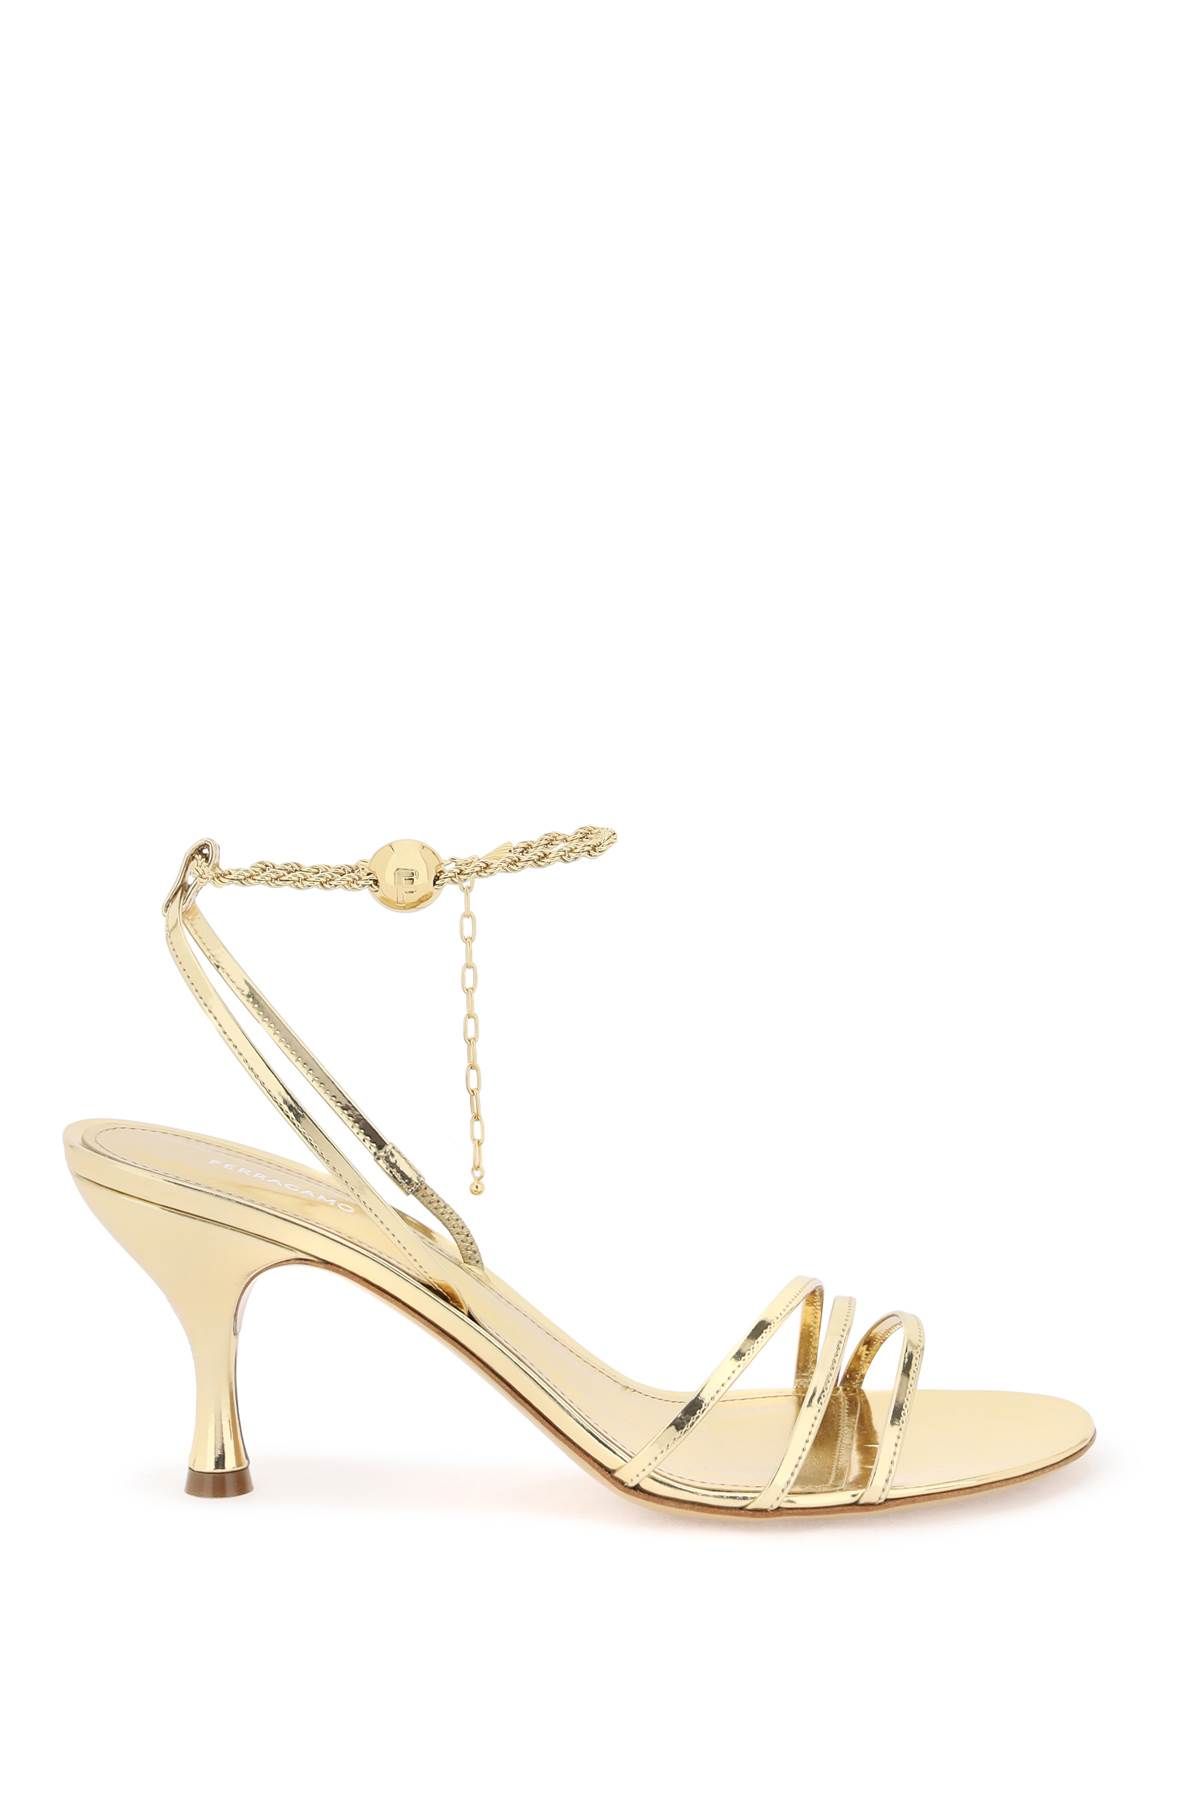 Ferragamo Sandals With Chain In Gold